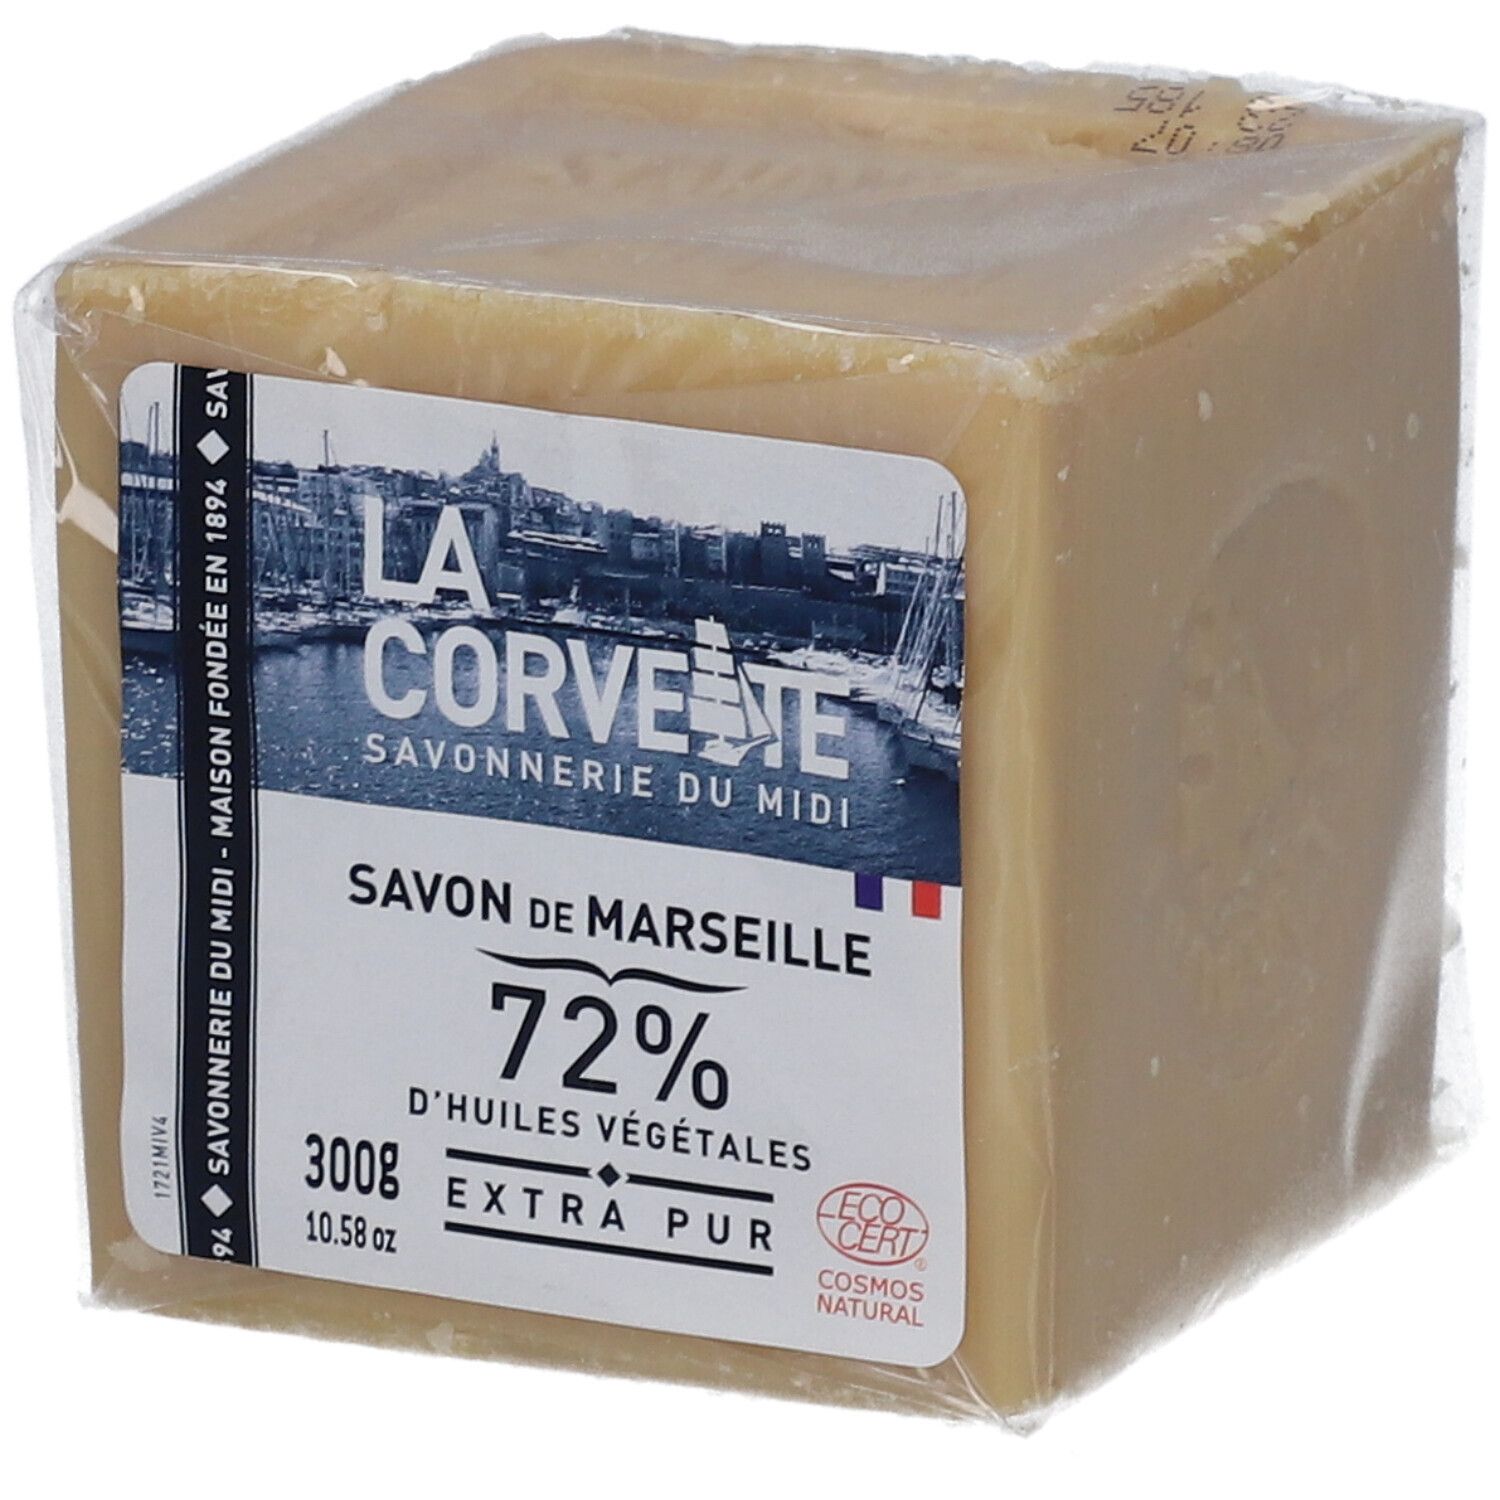 LA Corvette Cube de Savon de Marseille Extra pur